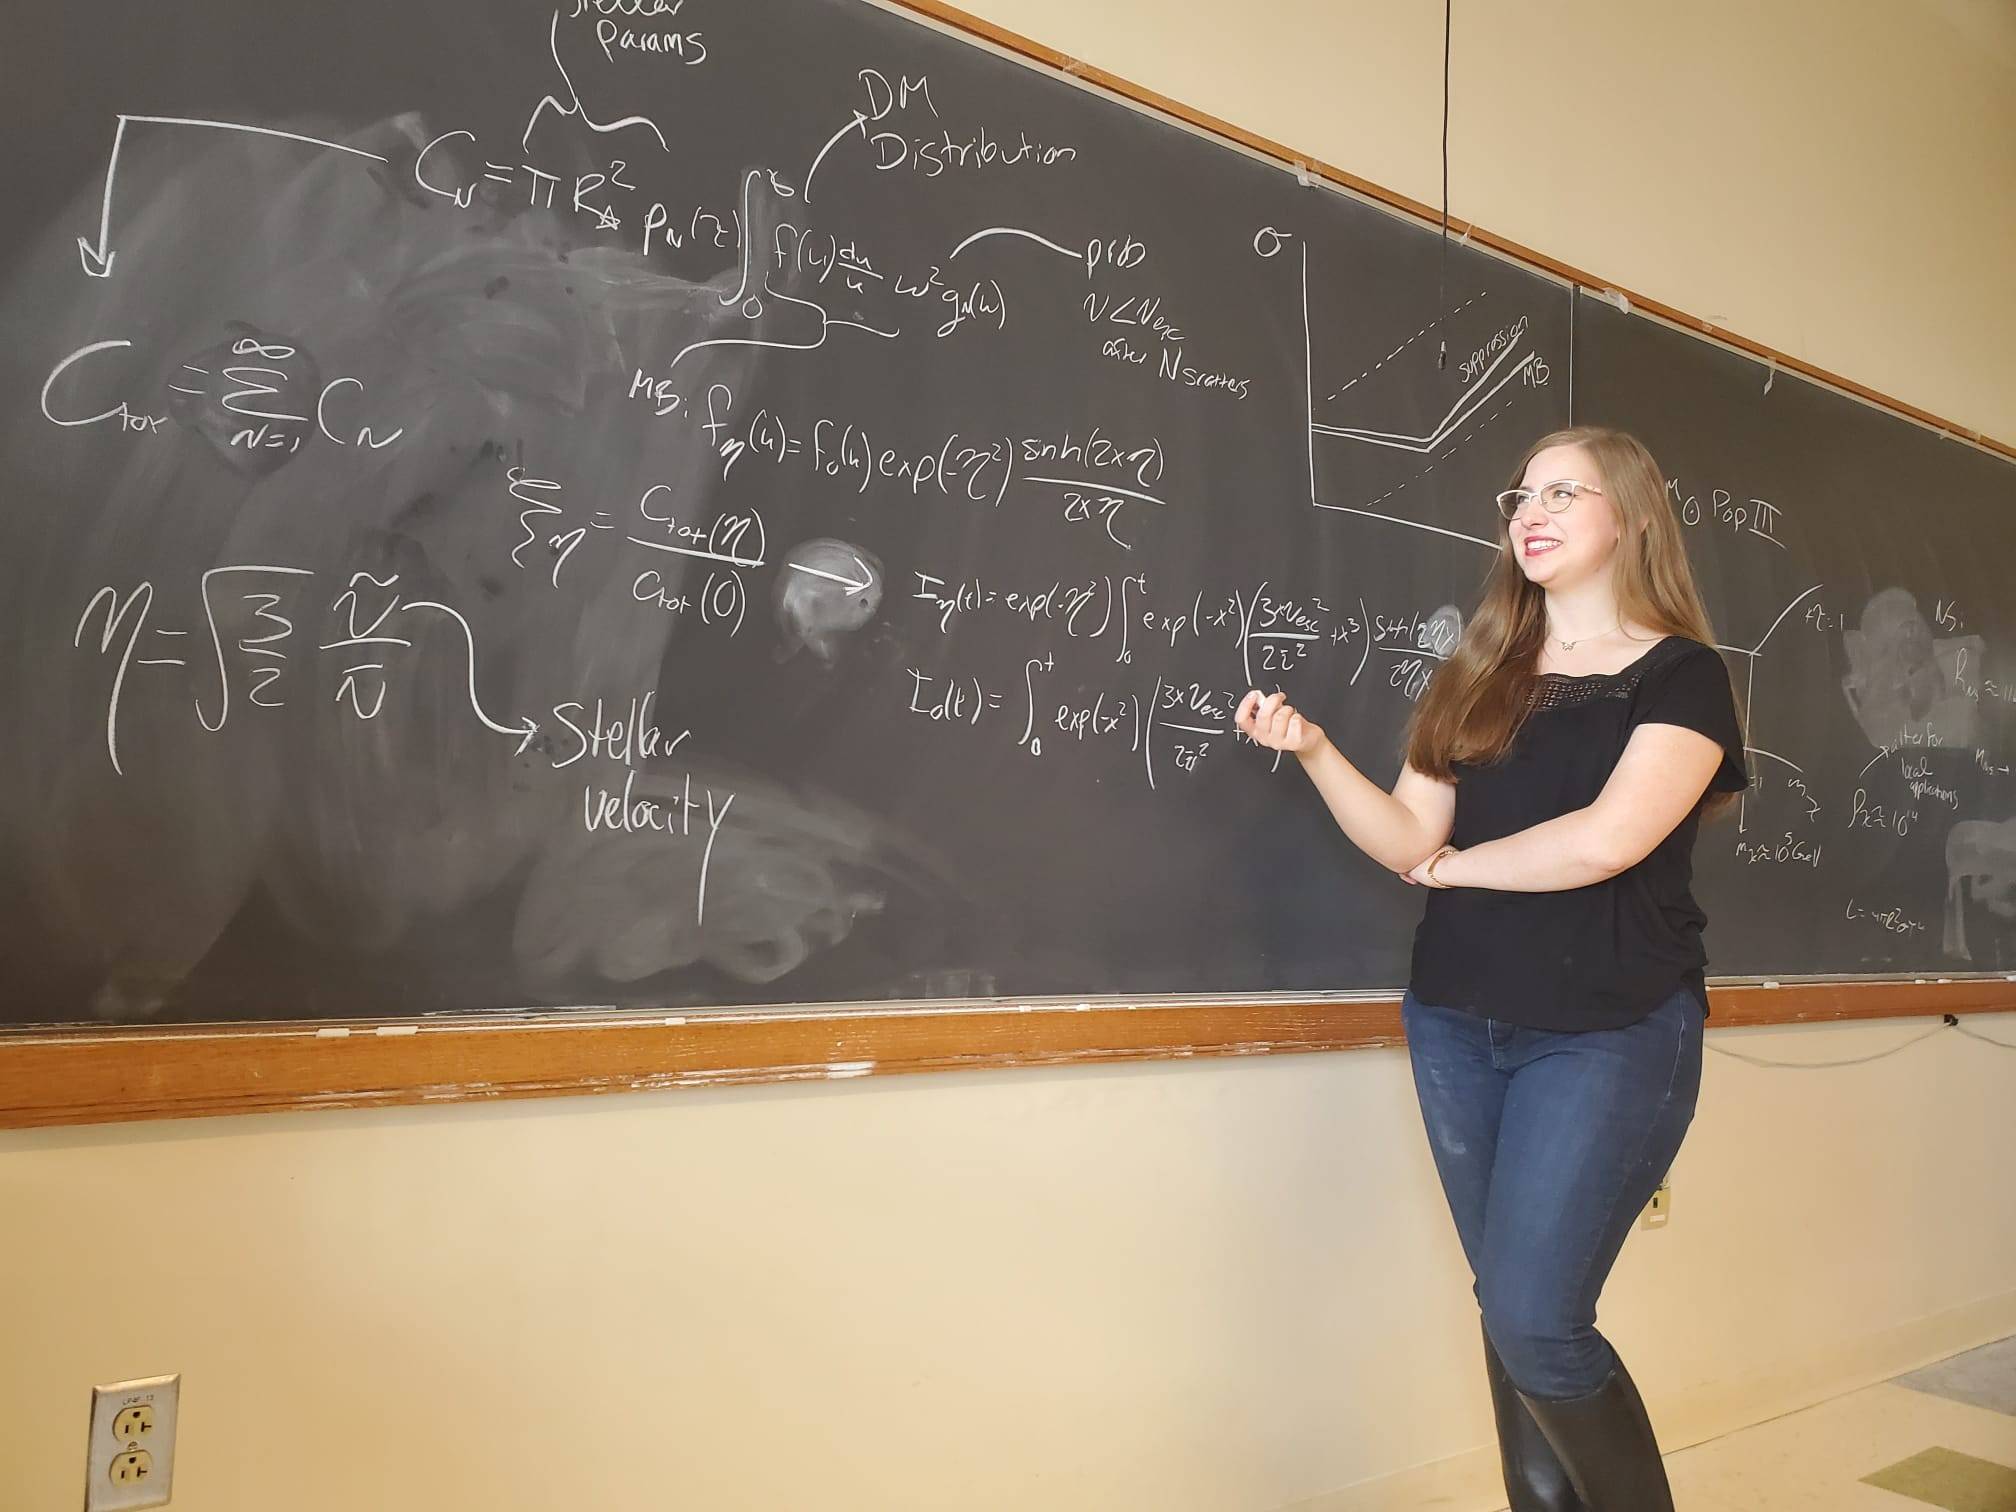 Jillian Paulin is a junior majoring in Astrophysics